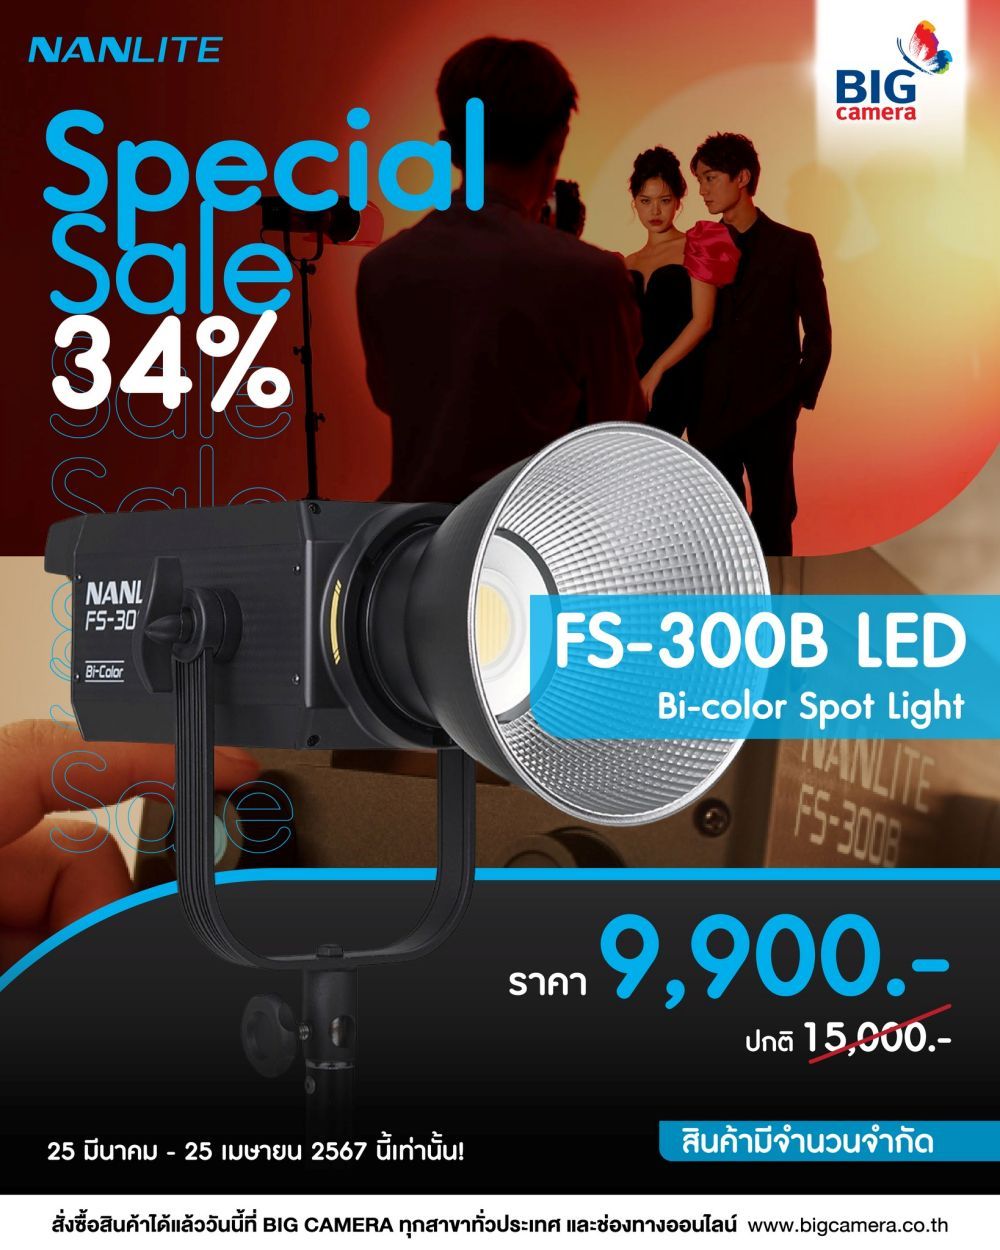 Special Sale Nanlite FS-300B LED Bi-color Spot Light เหลือเพียง 9,900.- 